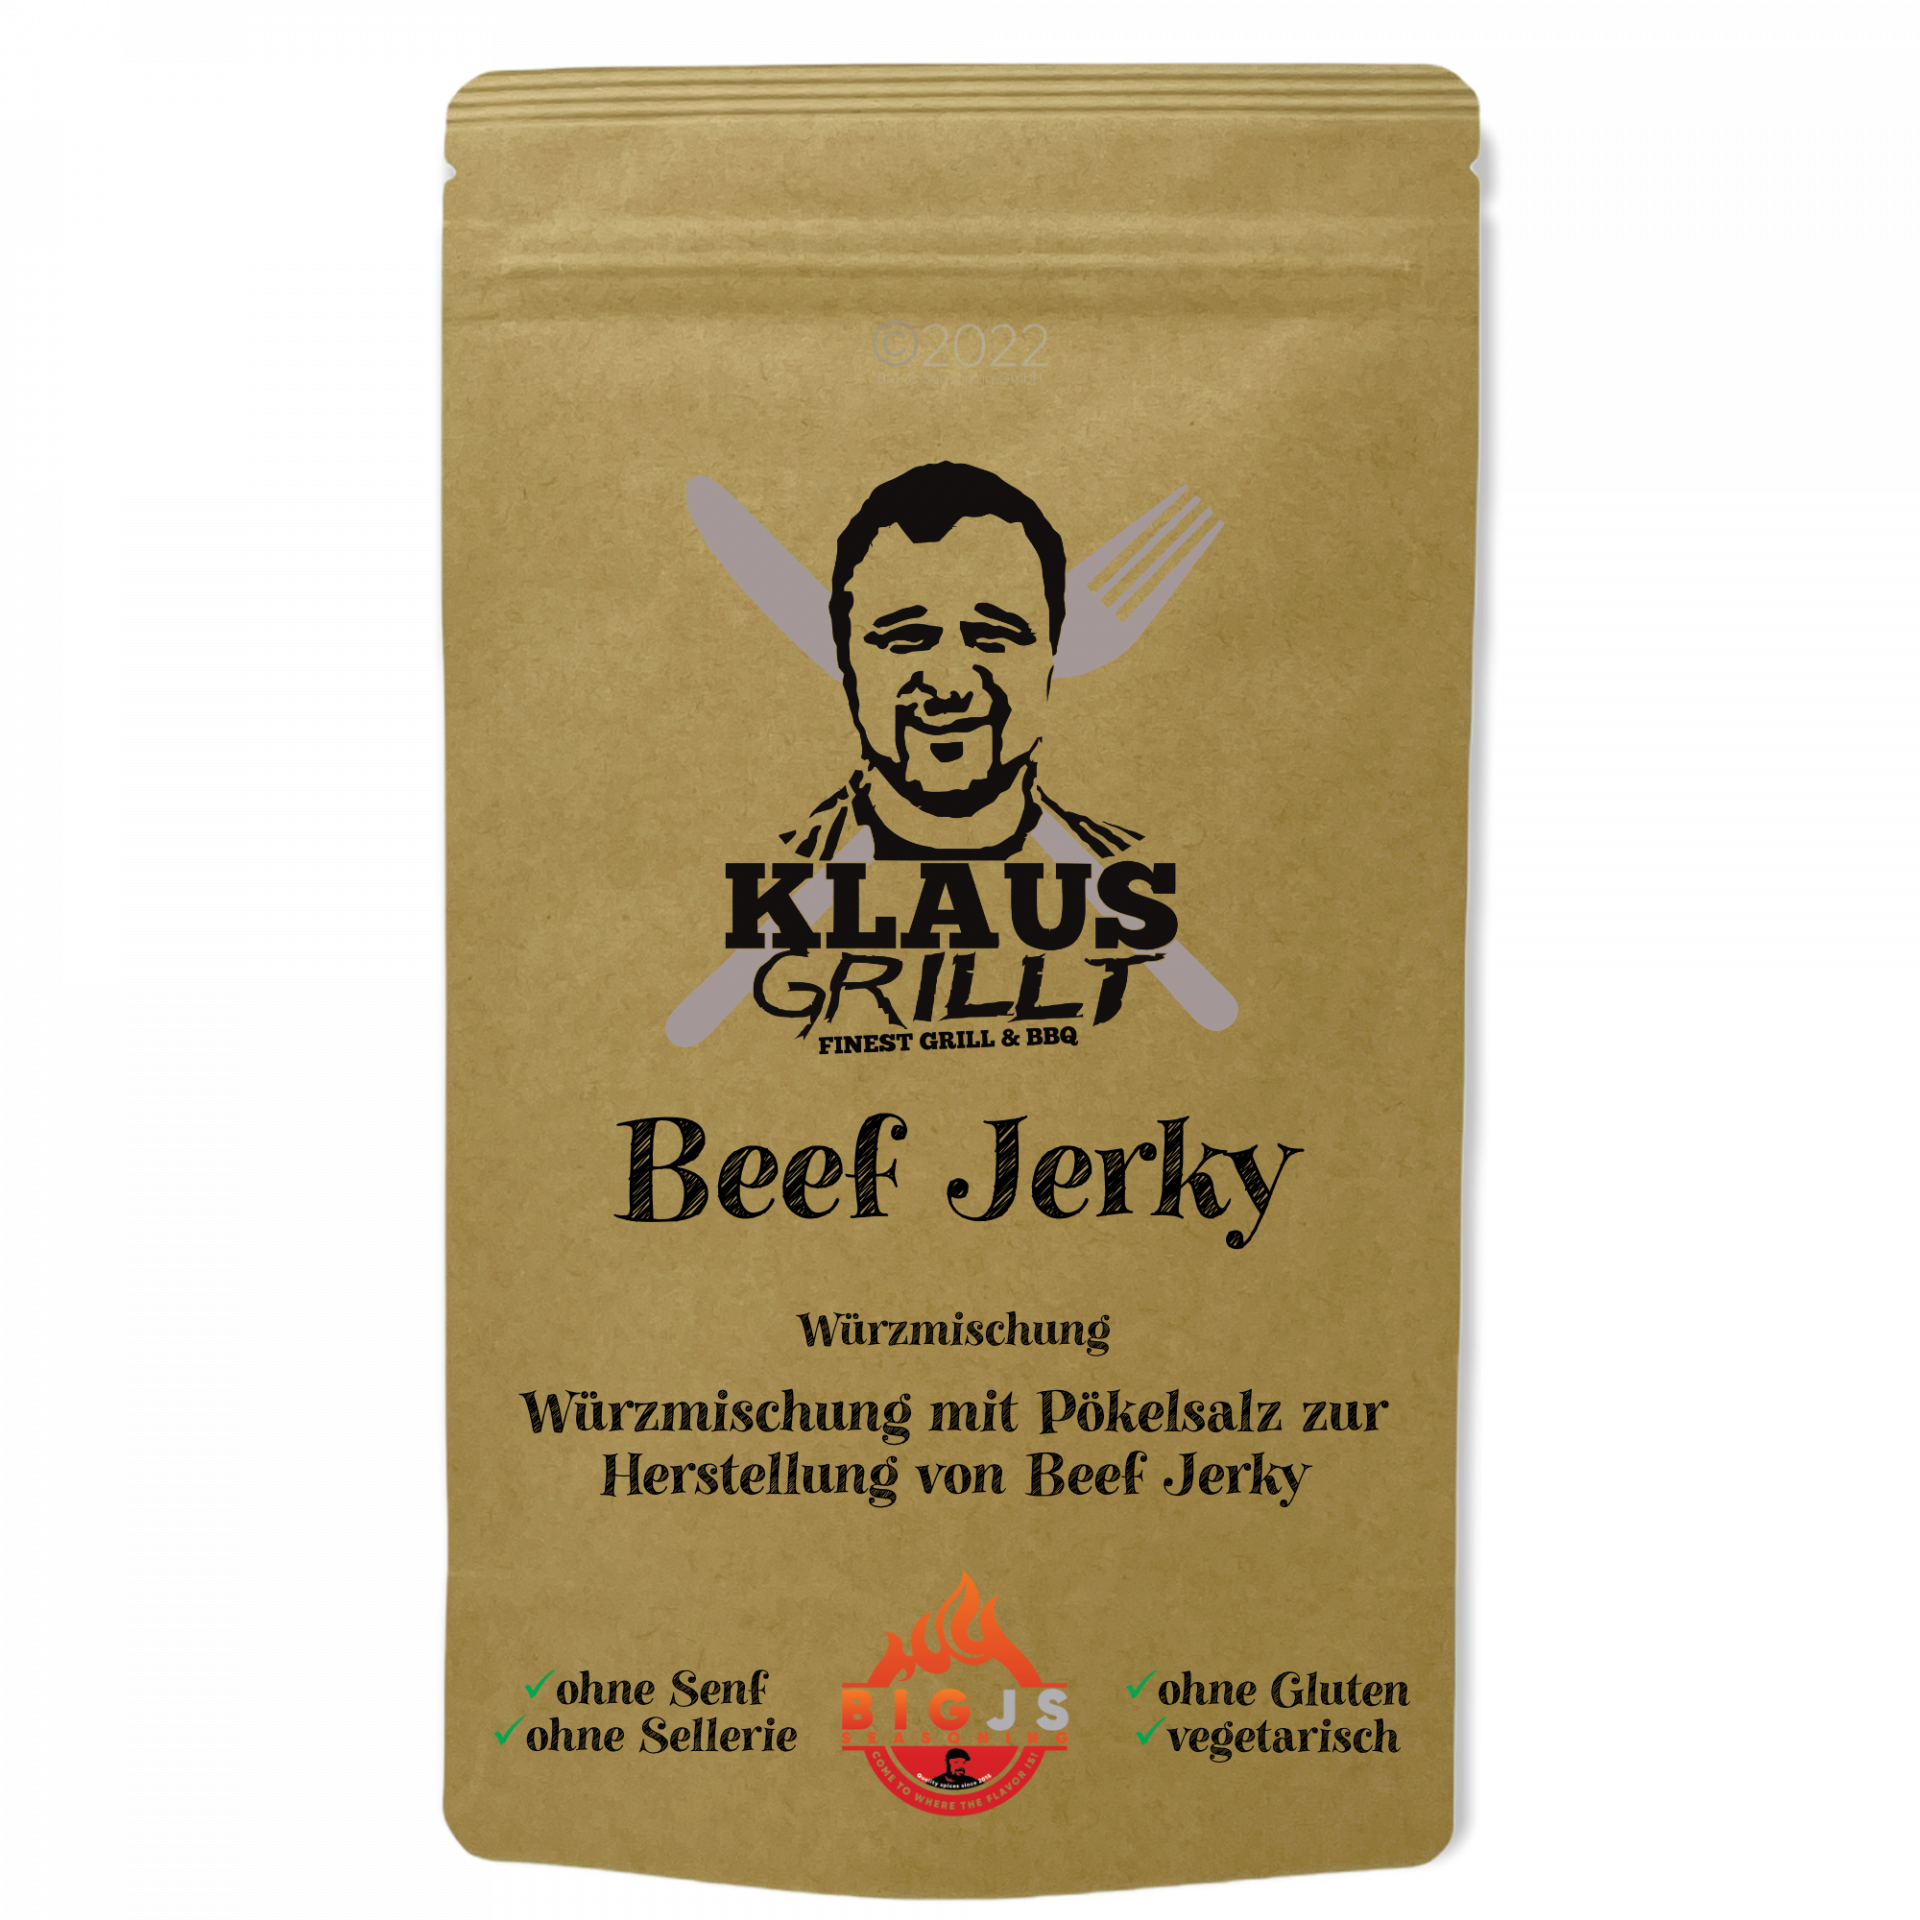 Klaus grillt Beef Jerky Würzmischung 400 g Beutel